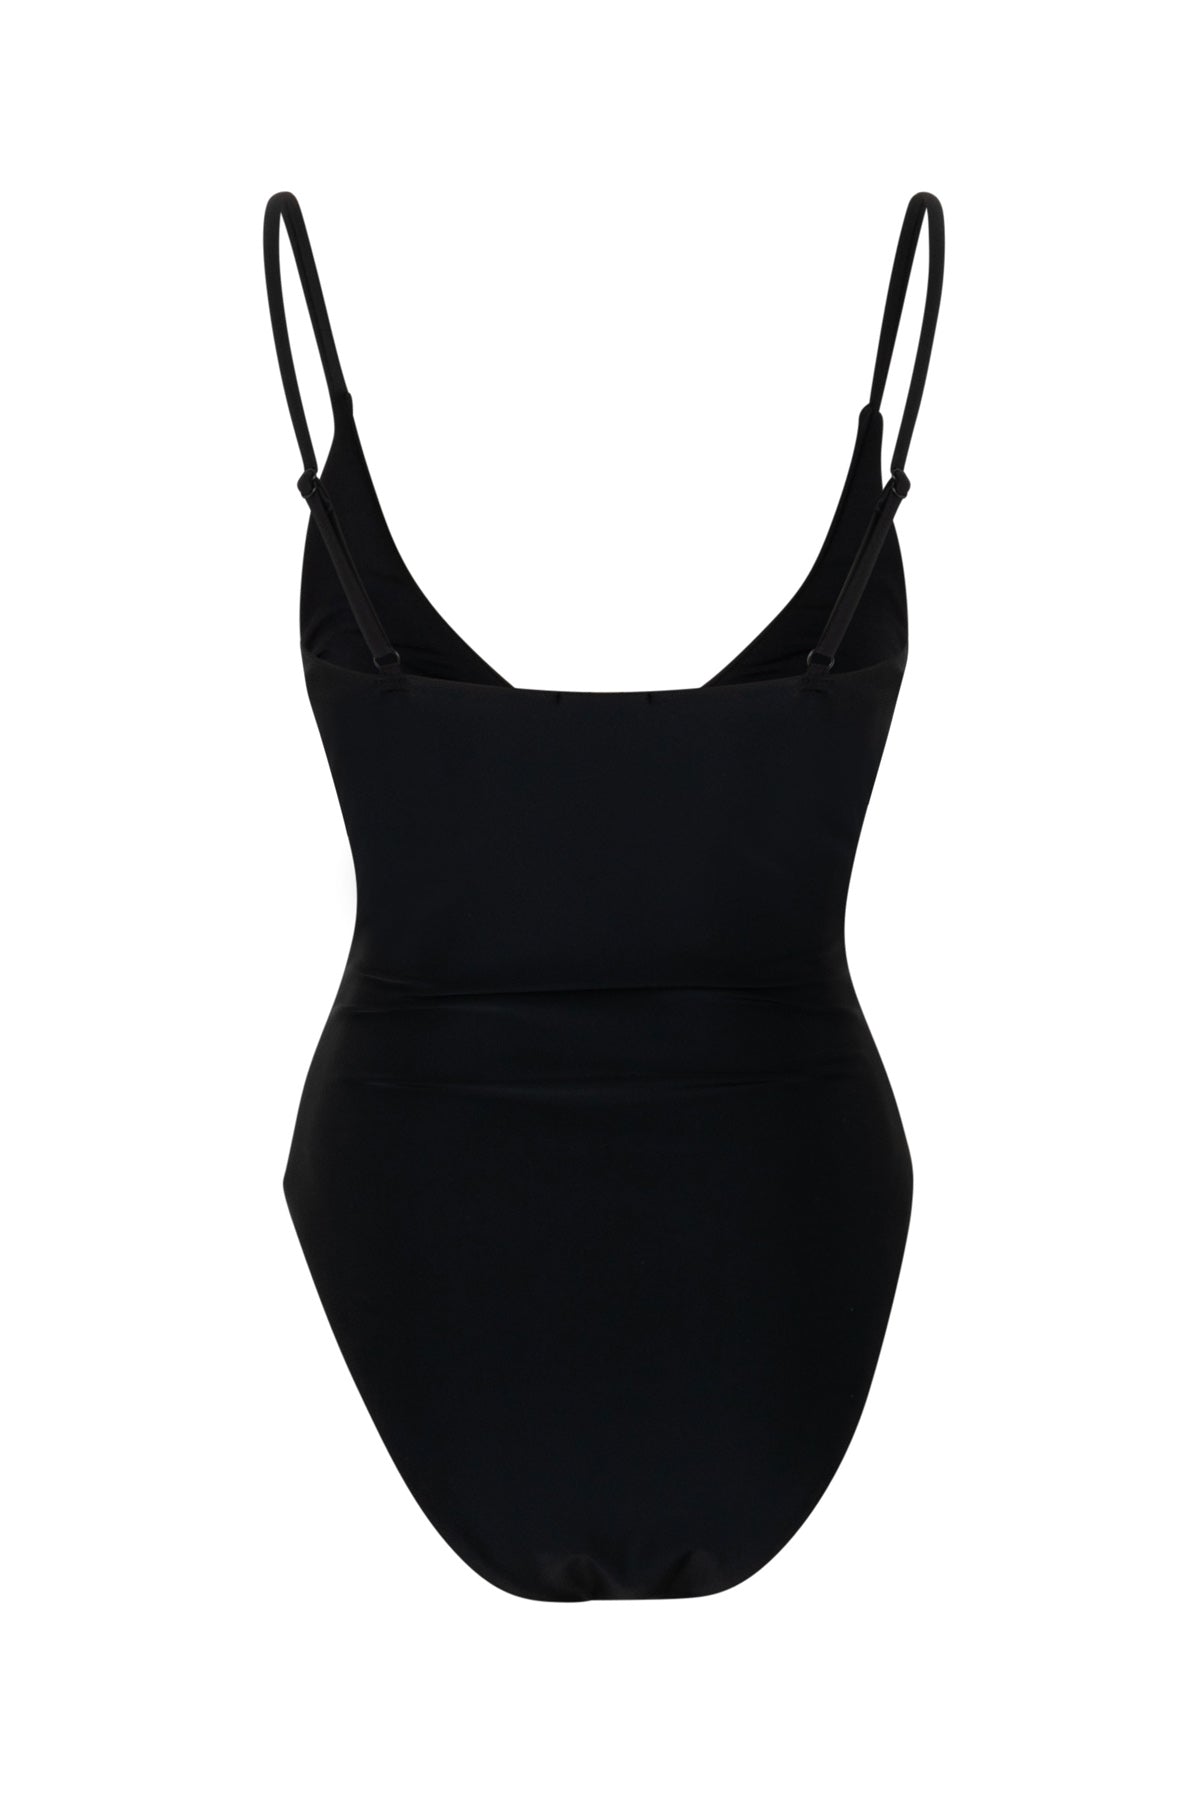 CRAS Clarissa Swimsuit Swimwear 9999 Black